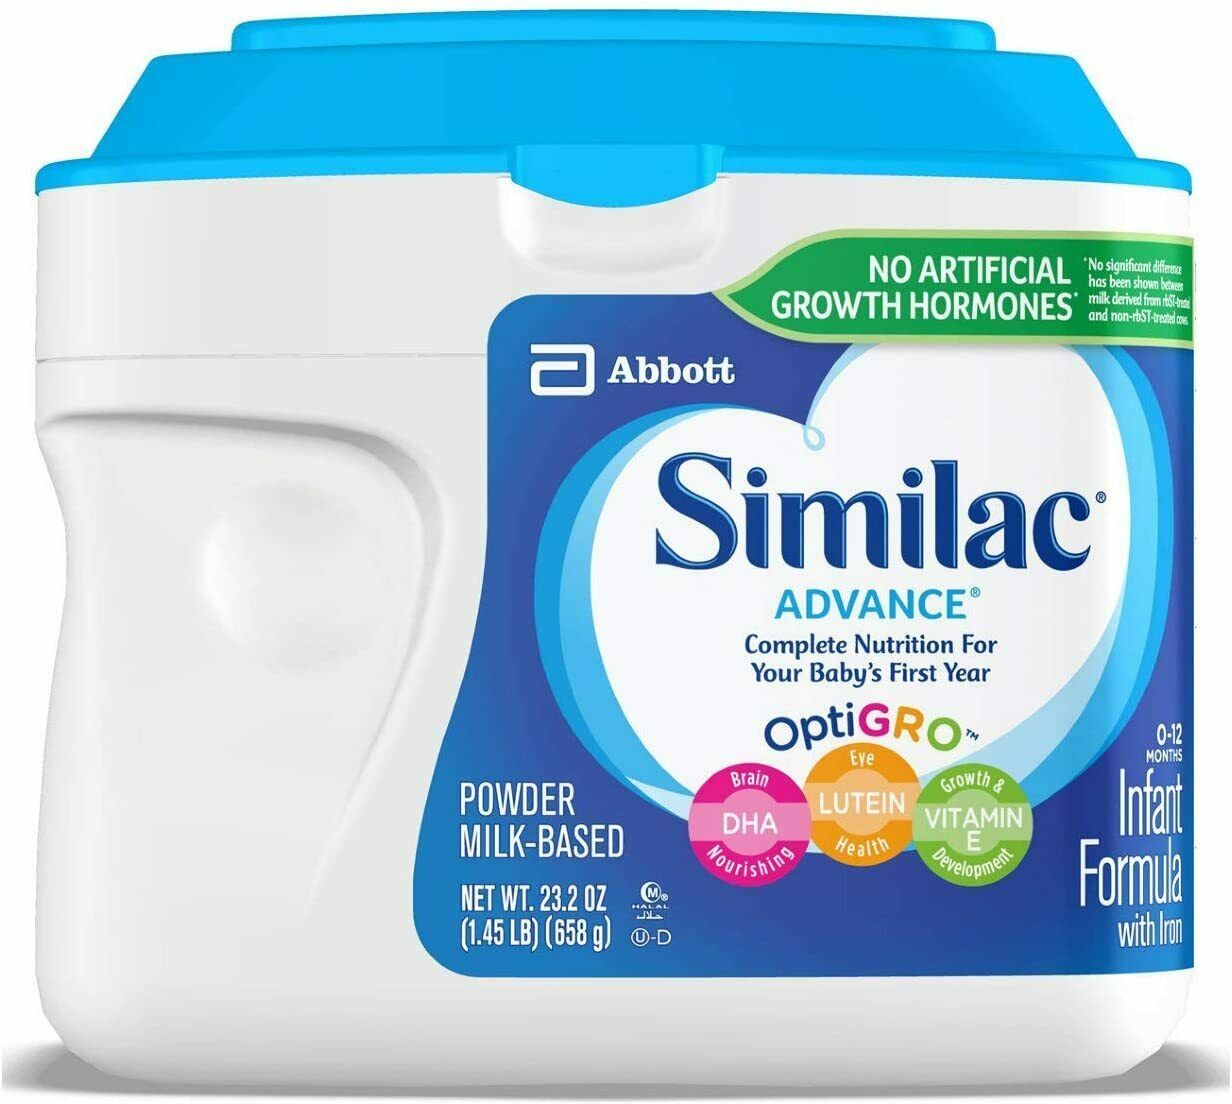 Similac Advance Infant Formula with Iron - OptiGRO - 1.45lb - Use By 10/1/2021 - $25.23